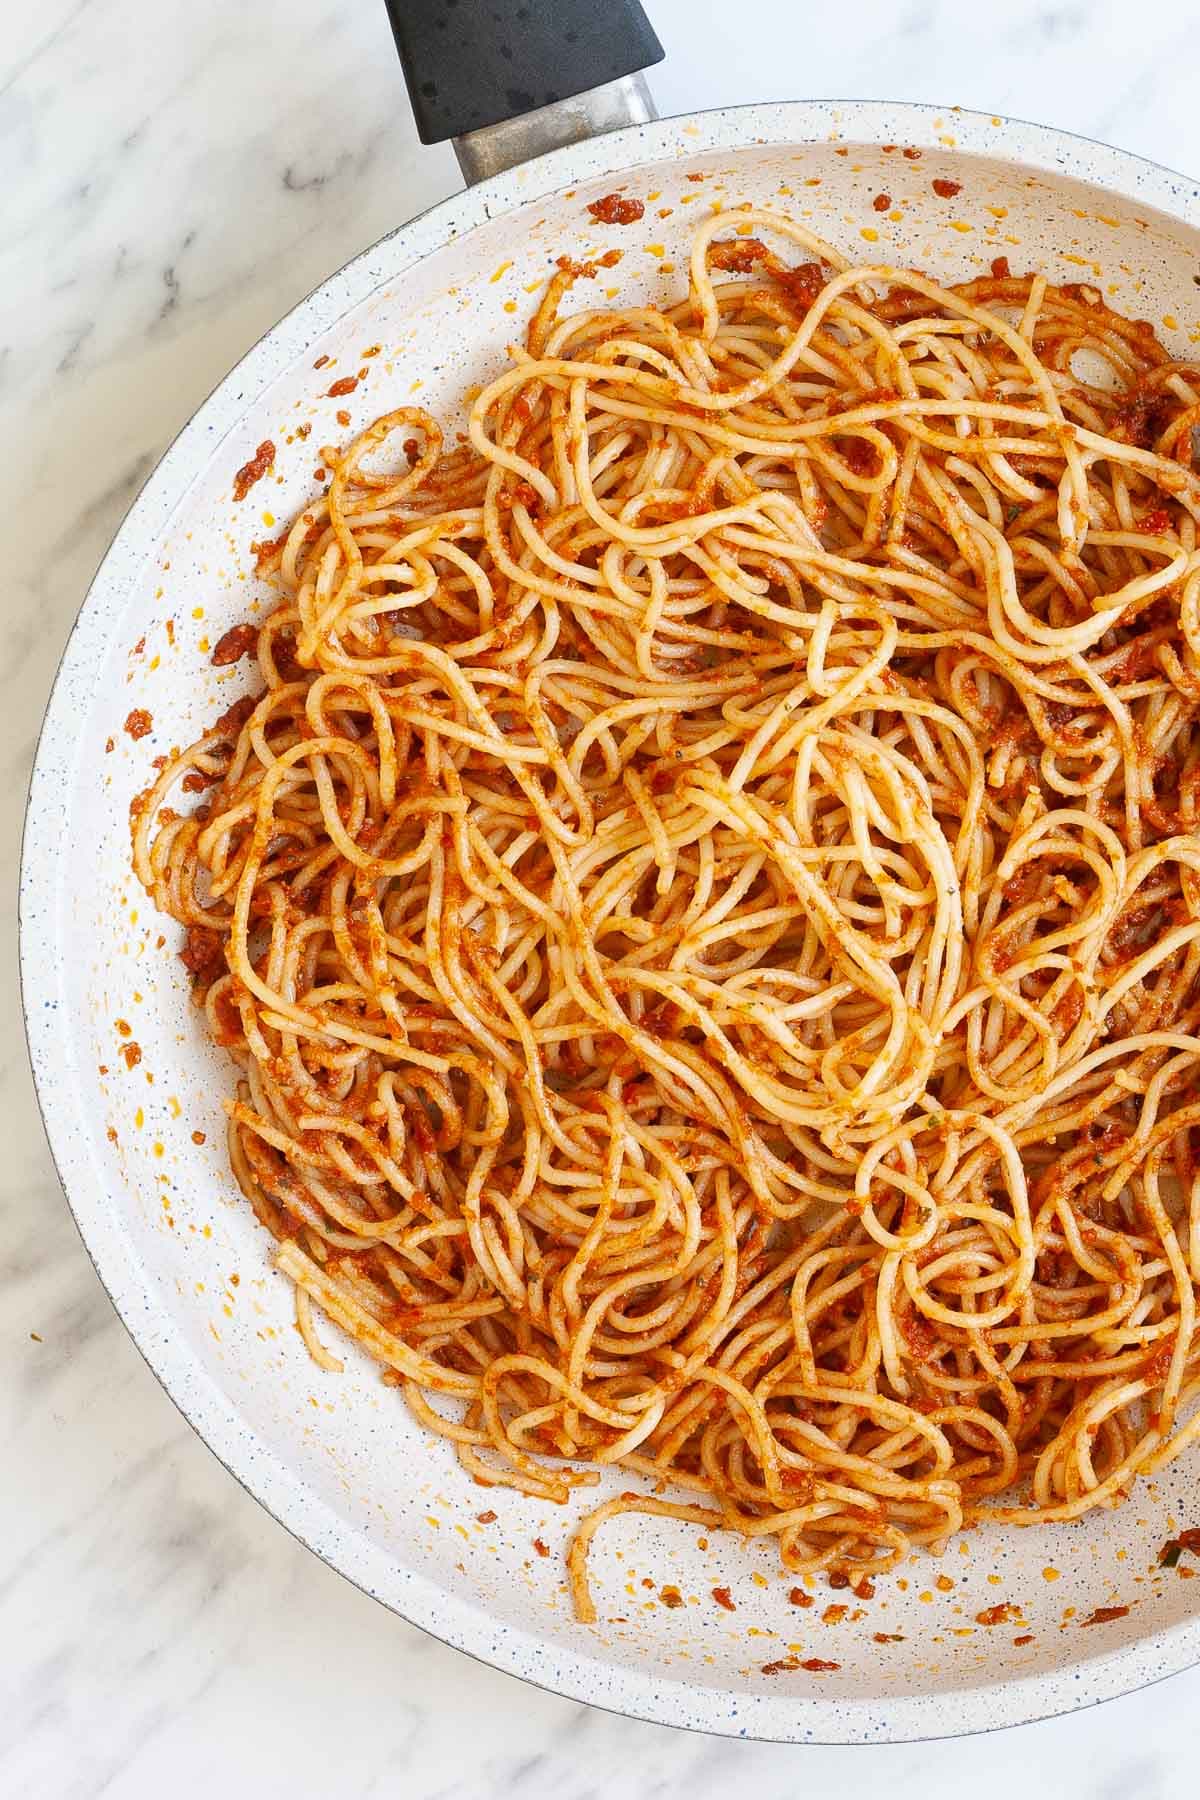 Red pesto spaghetti in a white frying pan